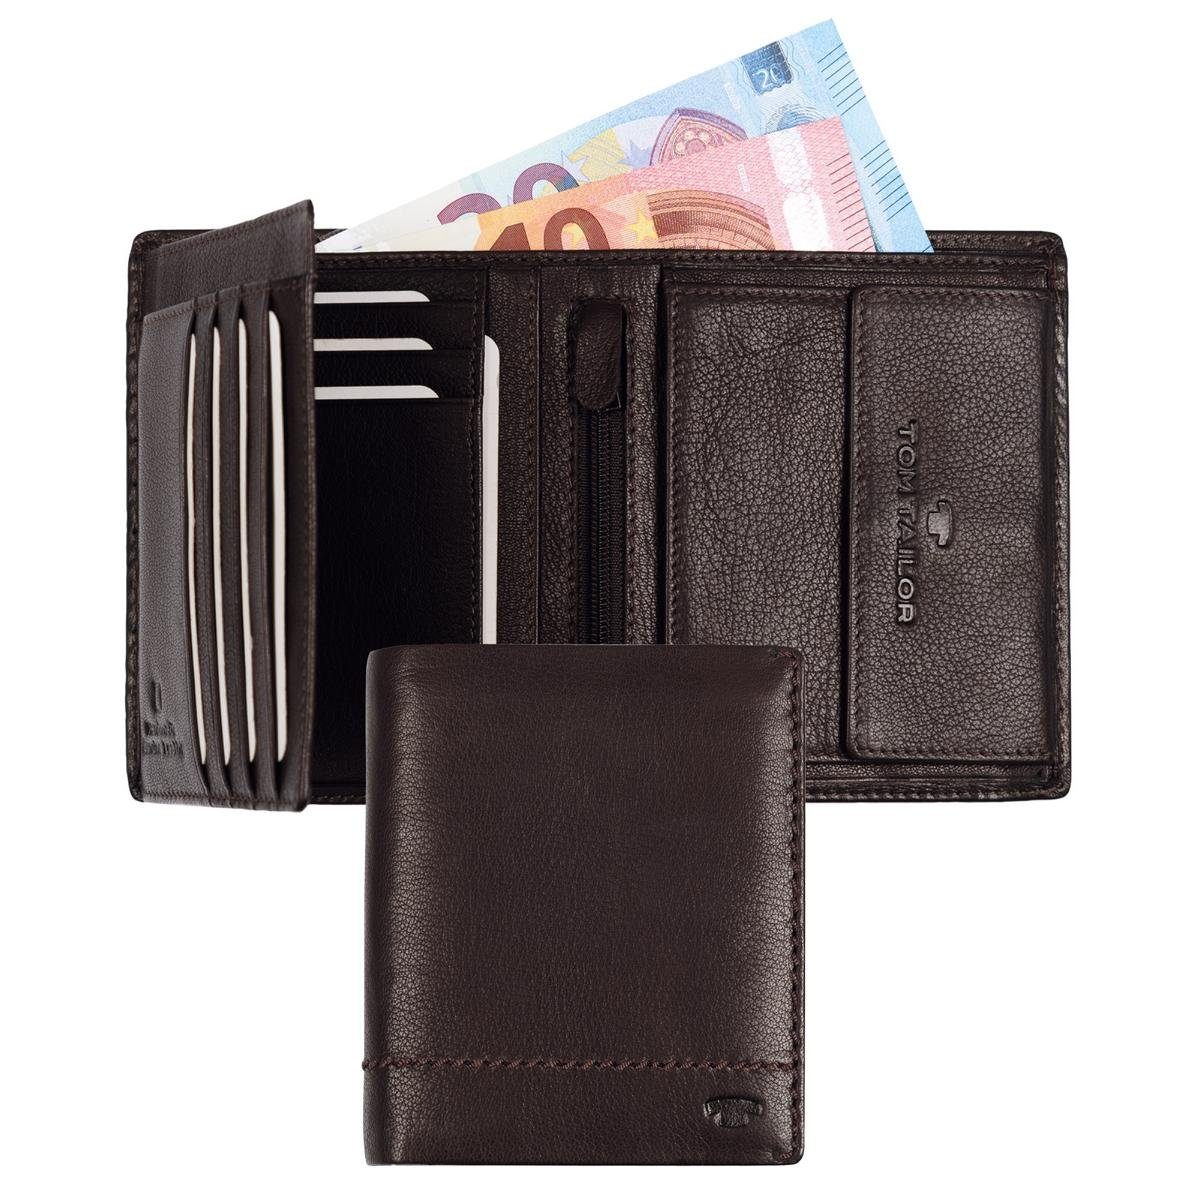 mit Lederbörse Geldbörse hochformat RFID-Ausleseschutz Tom TOM Tailor dunkelbraune TAILOR